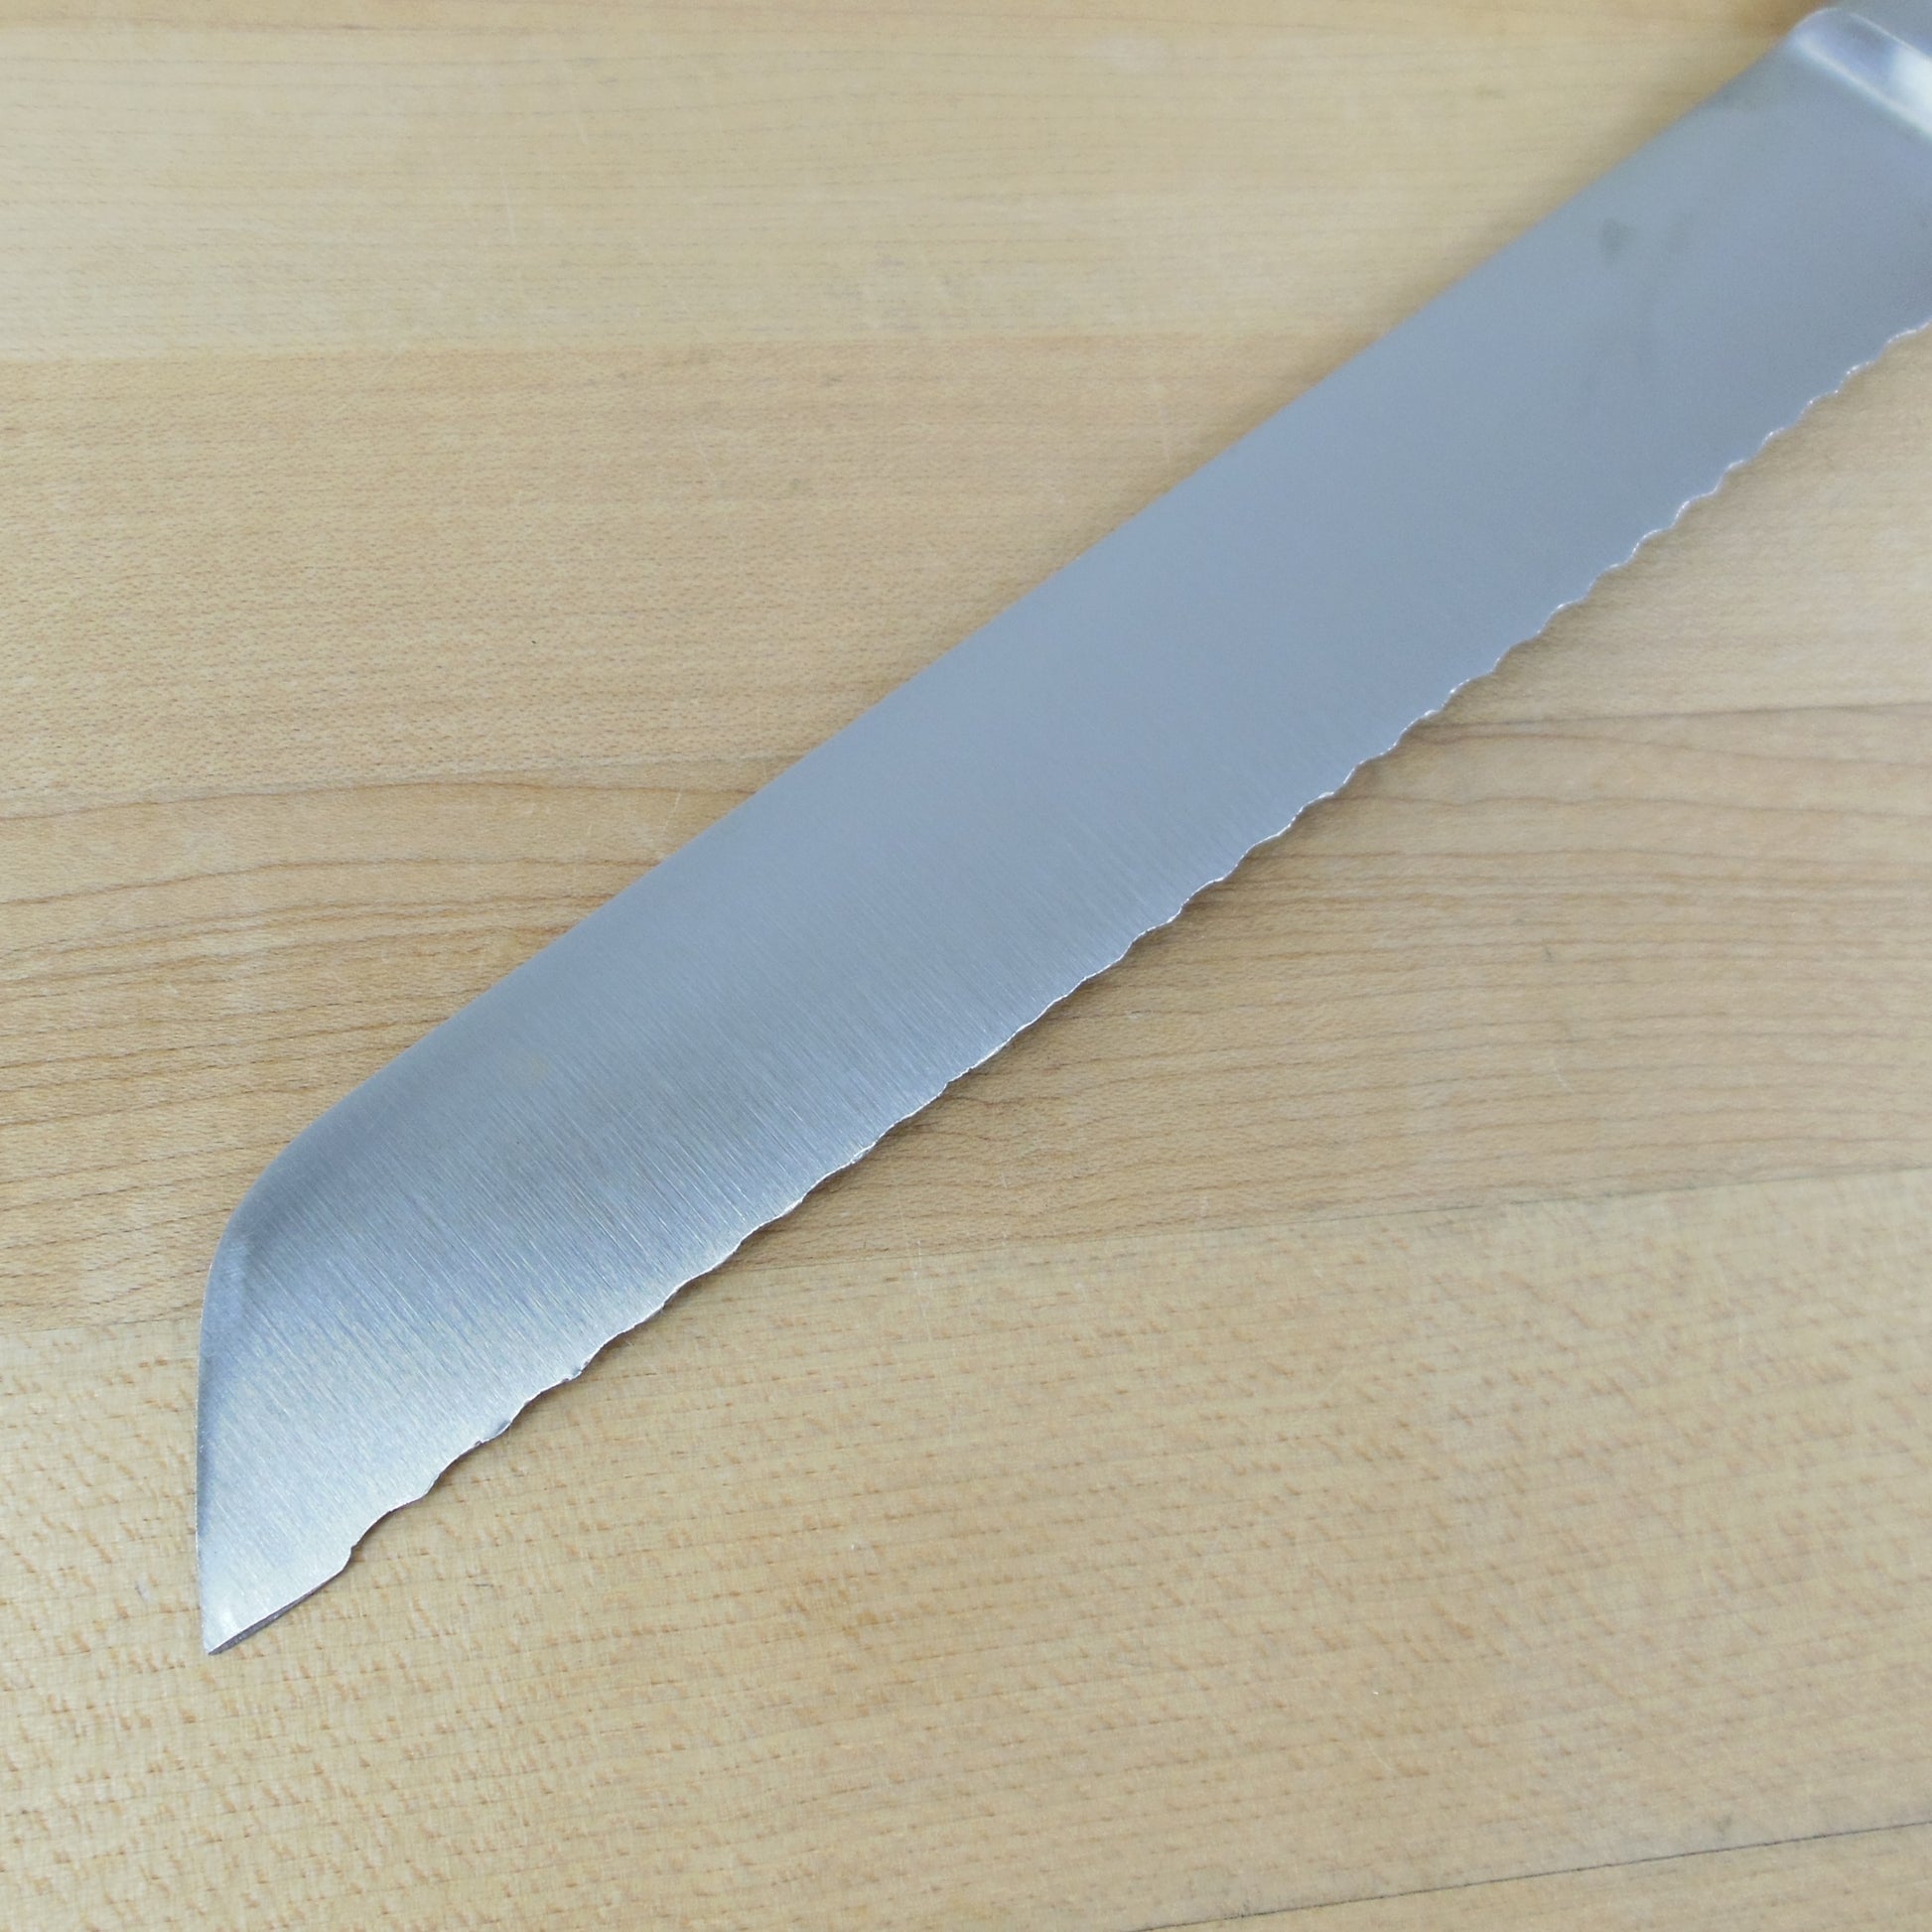 J.A. Henckels Germany 8" Serrated Bread Slicer Knife 31076-200mm Used